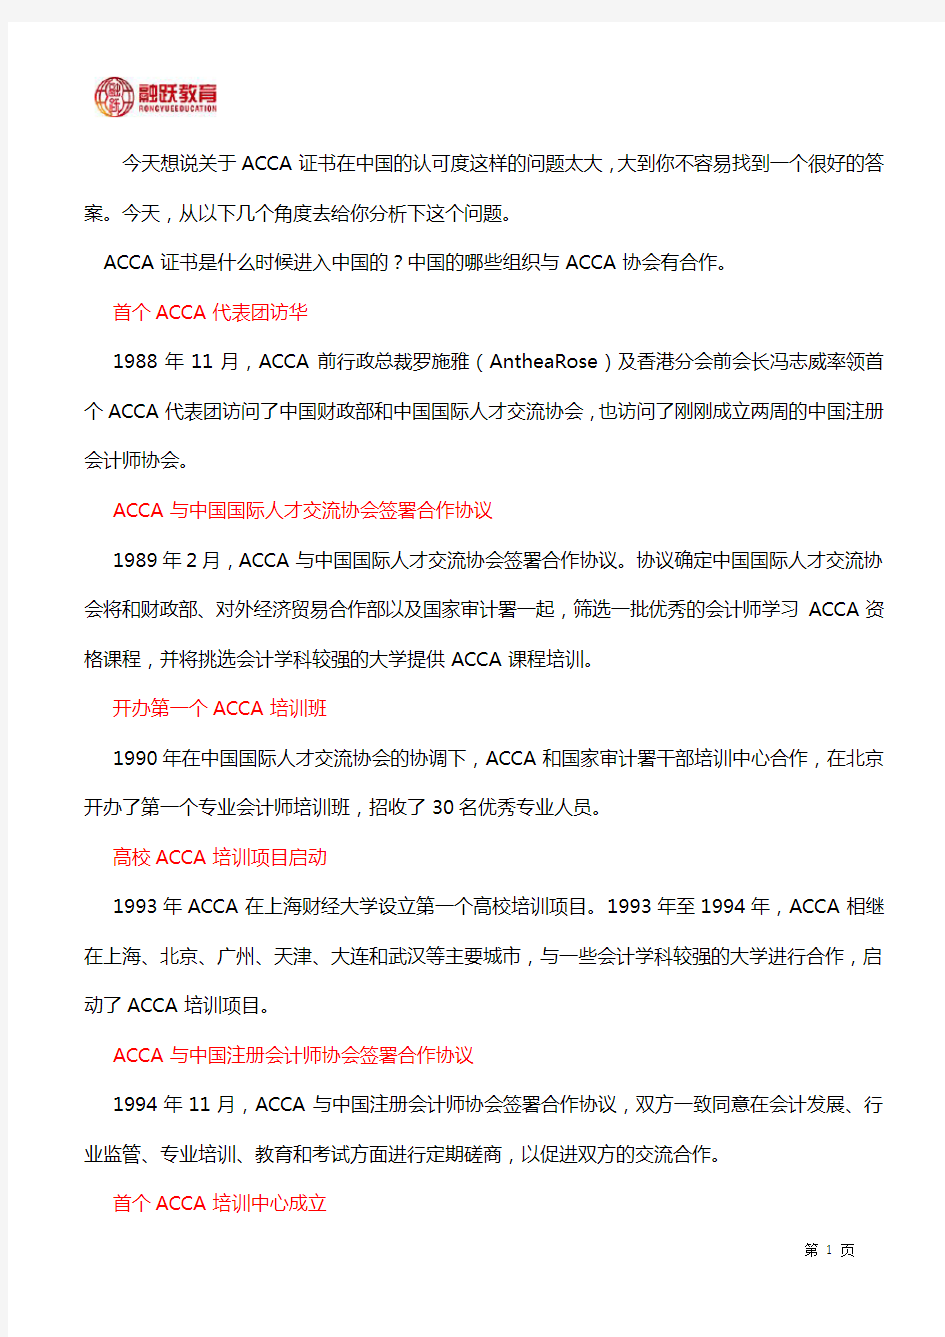 ACCA证书在中国的认可度怎么样